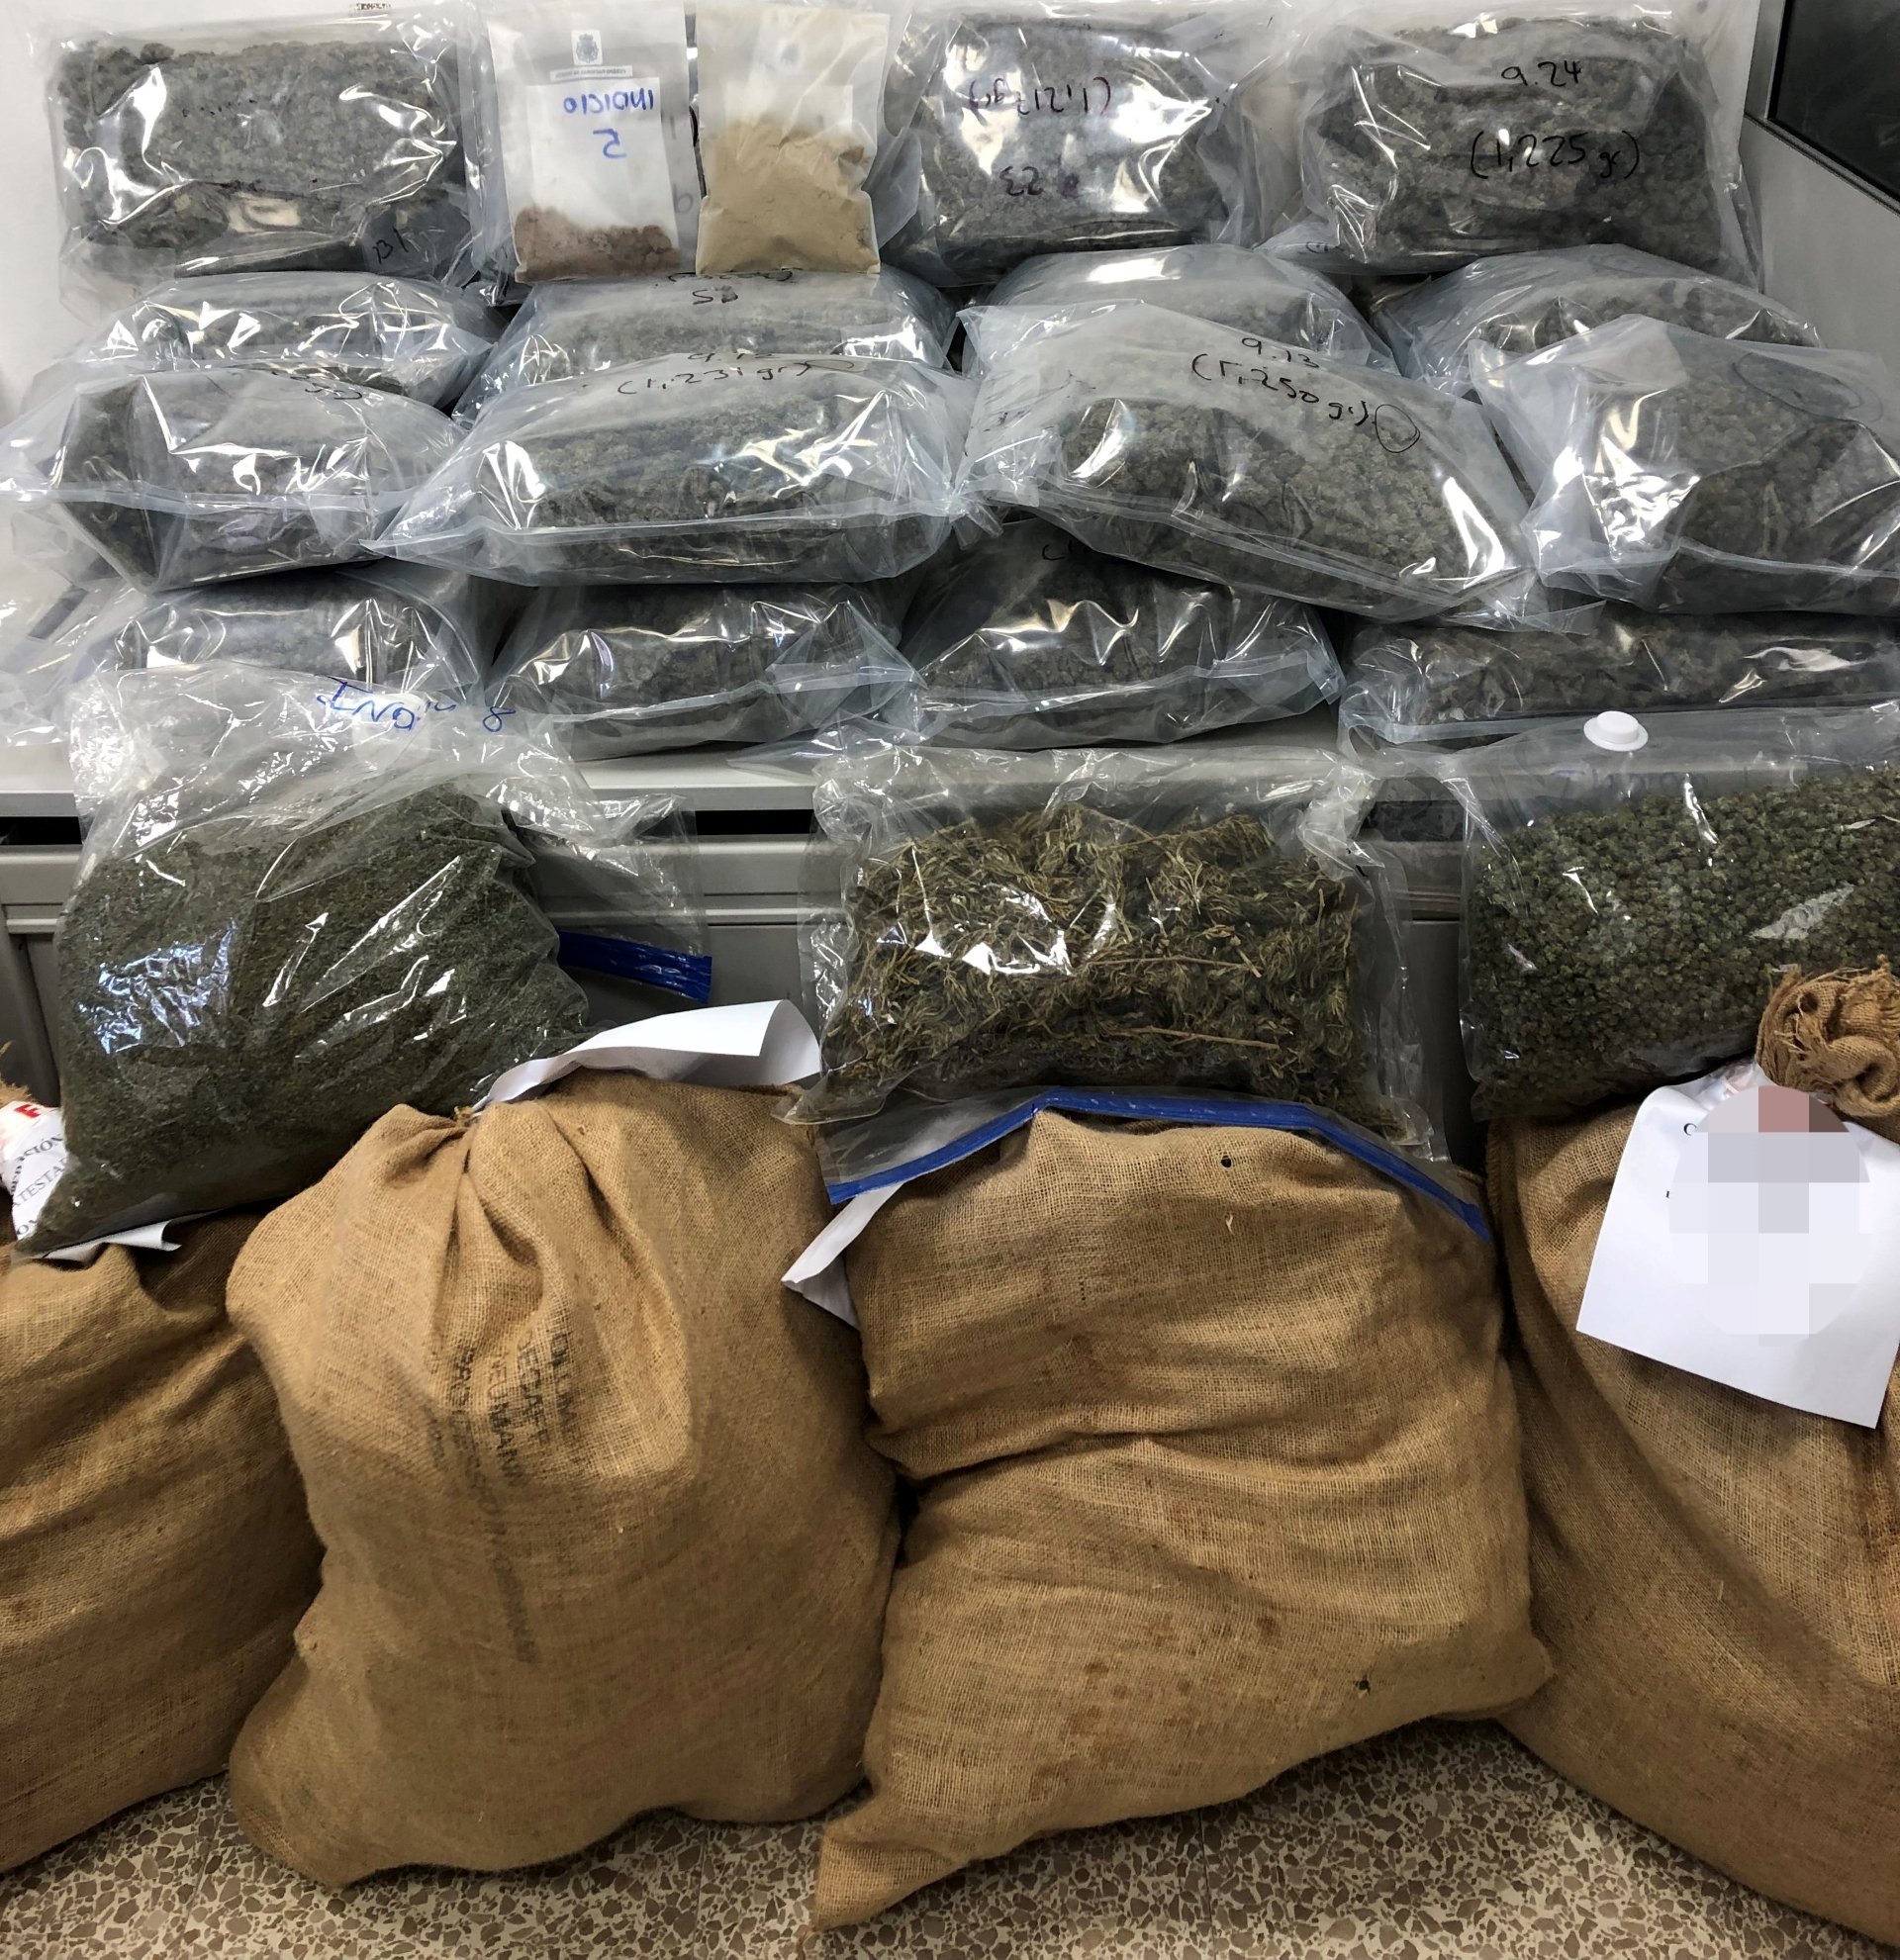 La marihuana confiscada per la policia